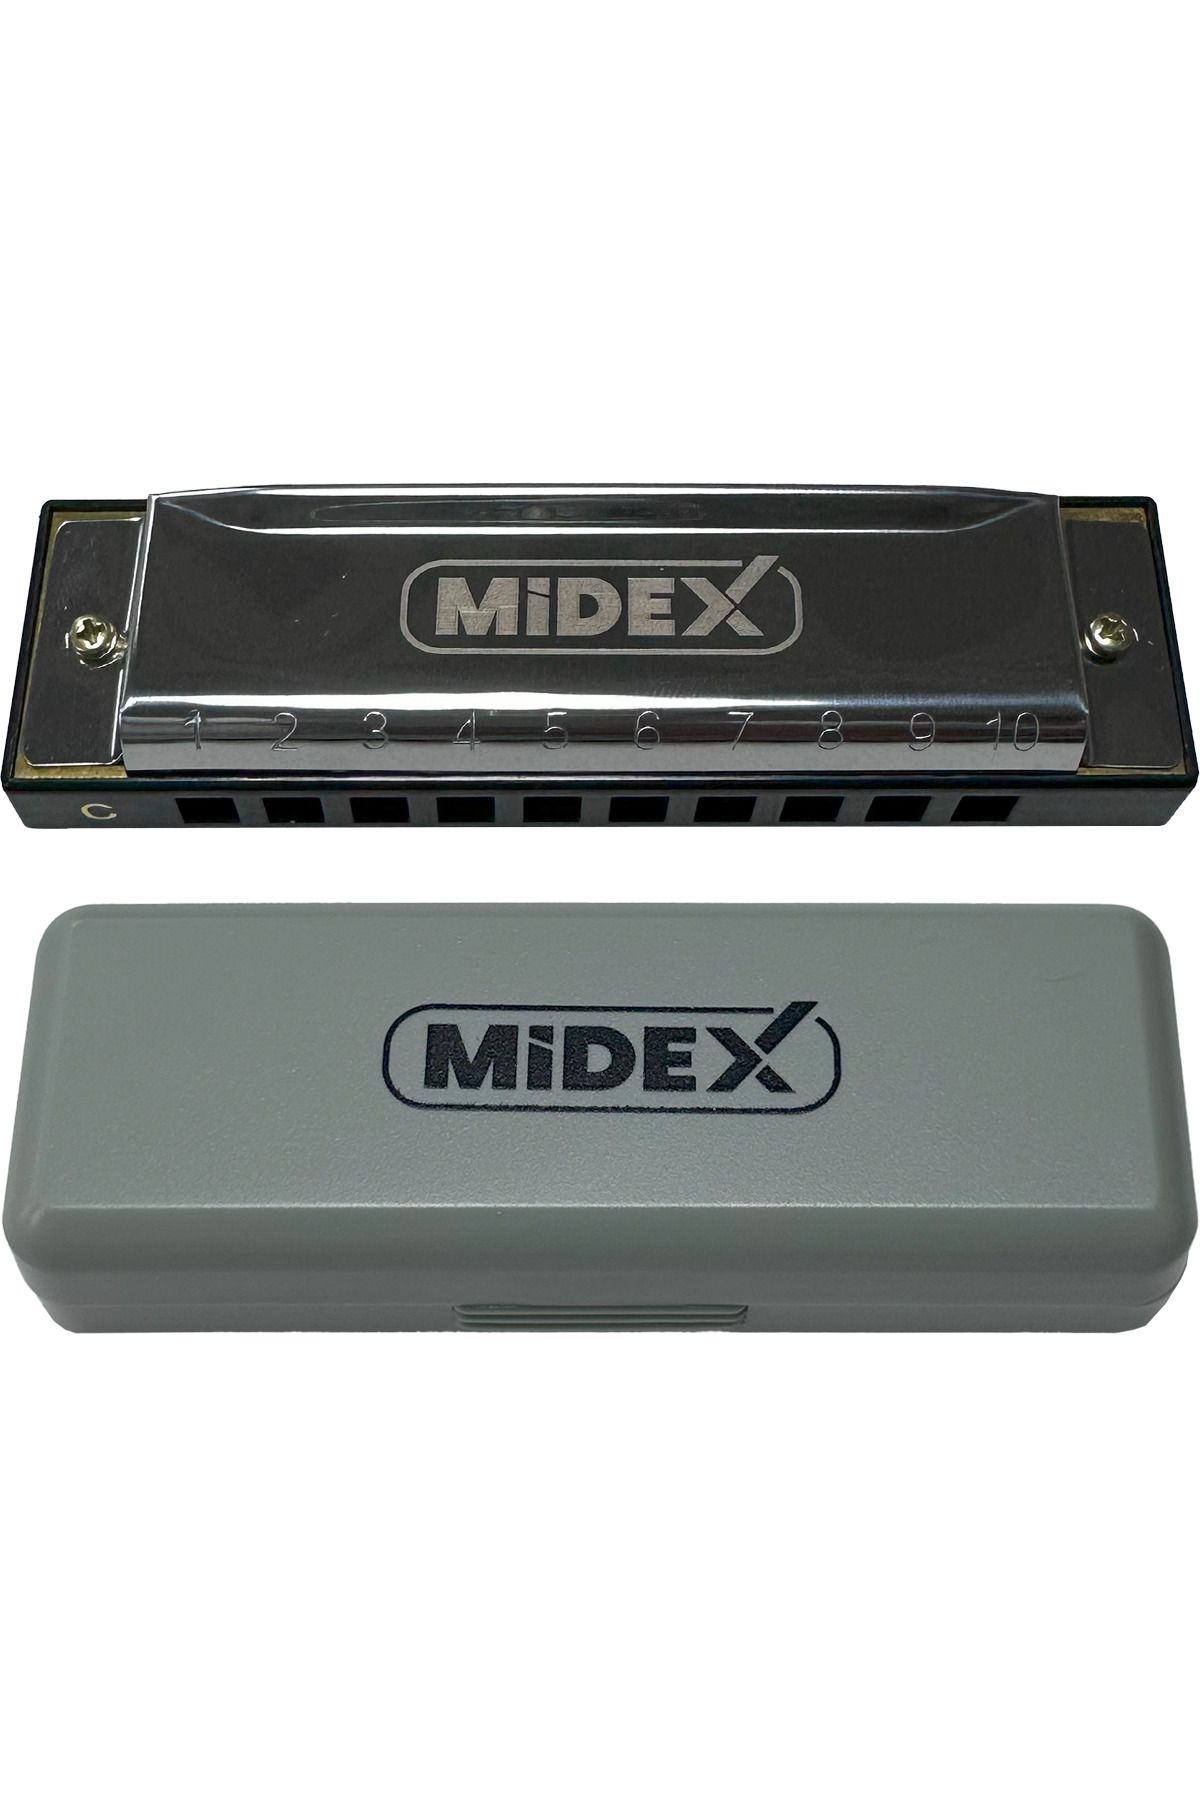 Midex HN-10SL Silver Örf Aletleri 10 Delikli Mızıka